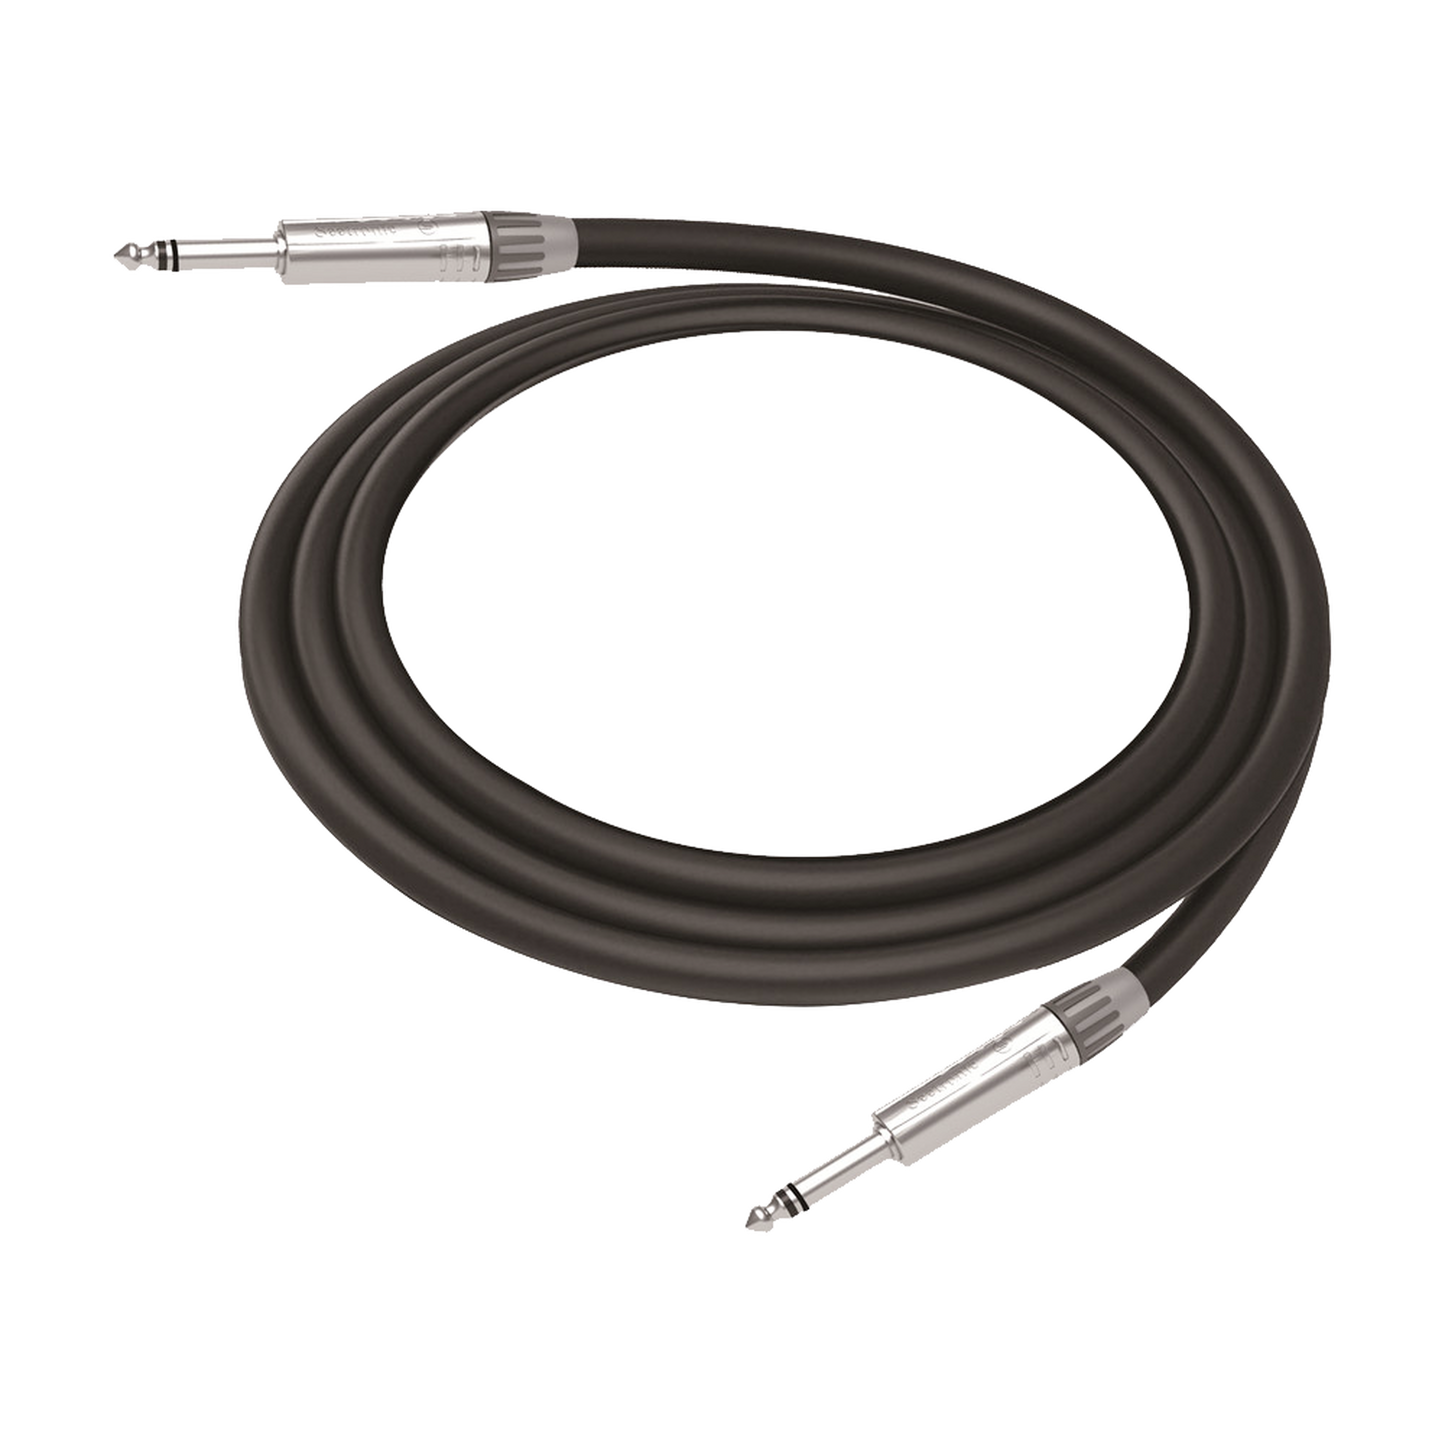 Cable de Audio | Plug 1/4 in a Plug 1/4 in Stereo | Carcasa Cromada | Conectores Seetronic | Longitud 3m